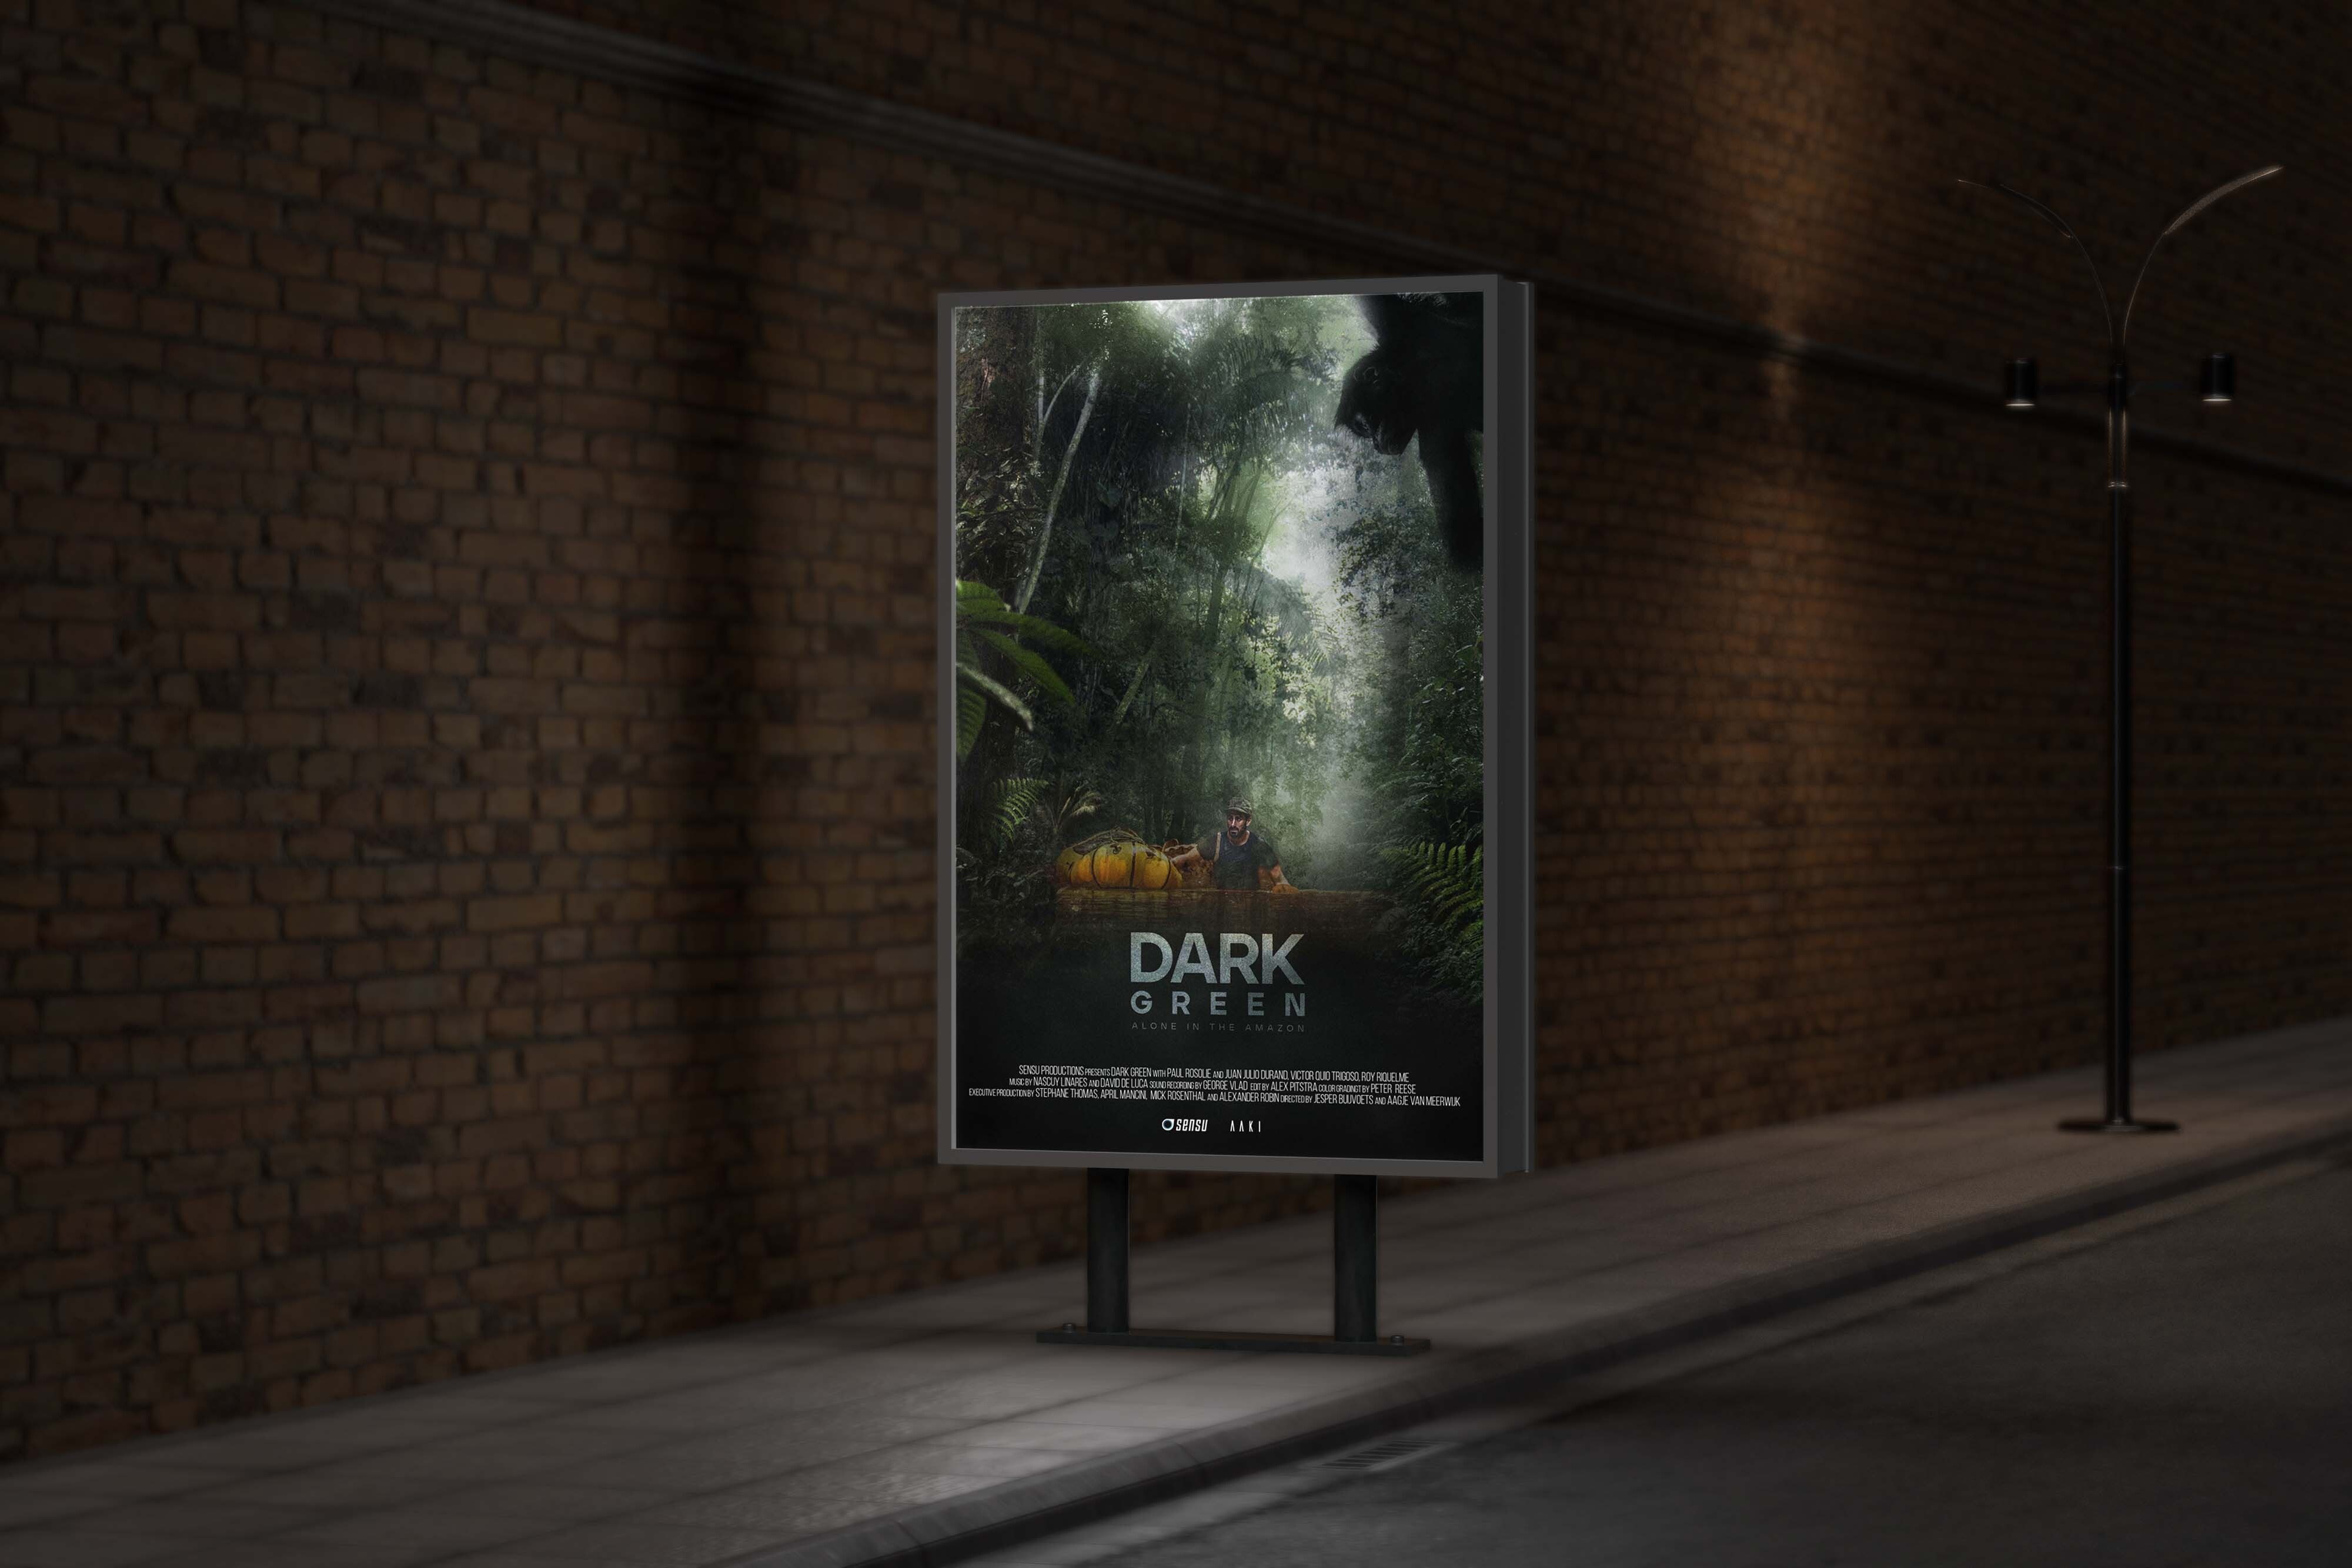 A film poster of Dark Green displayed on a billboard